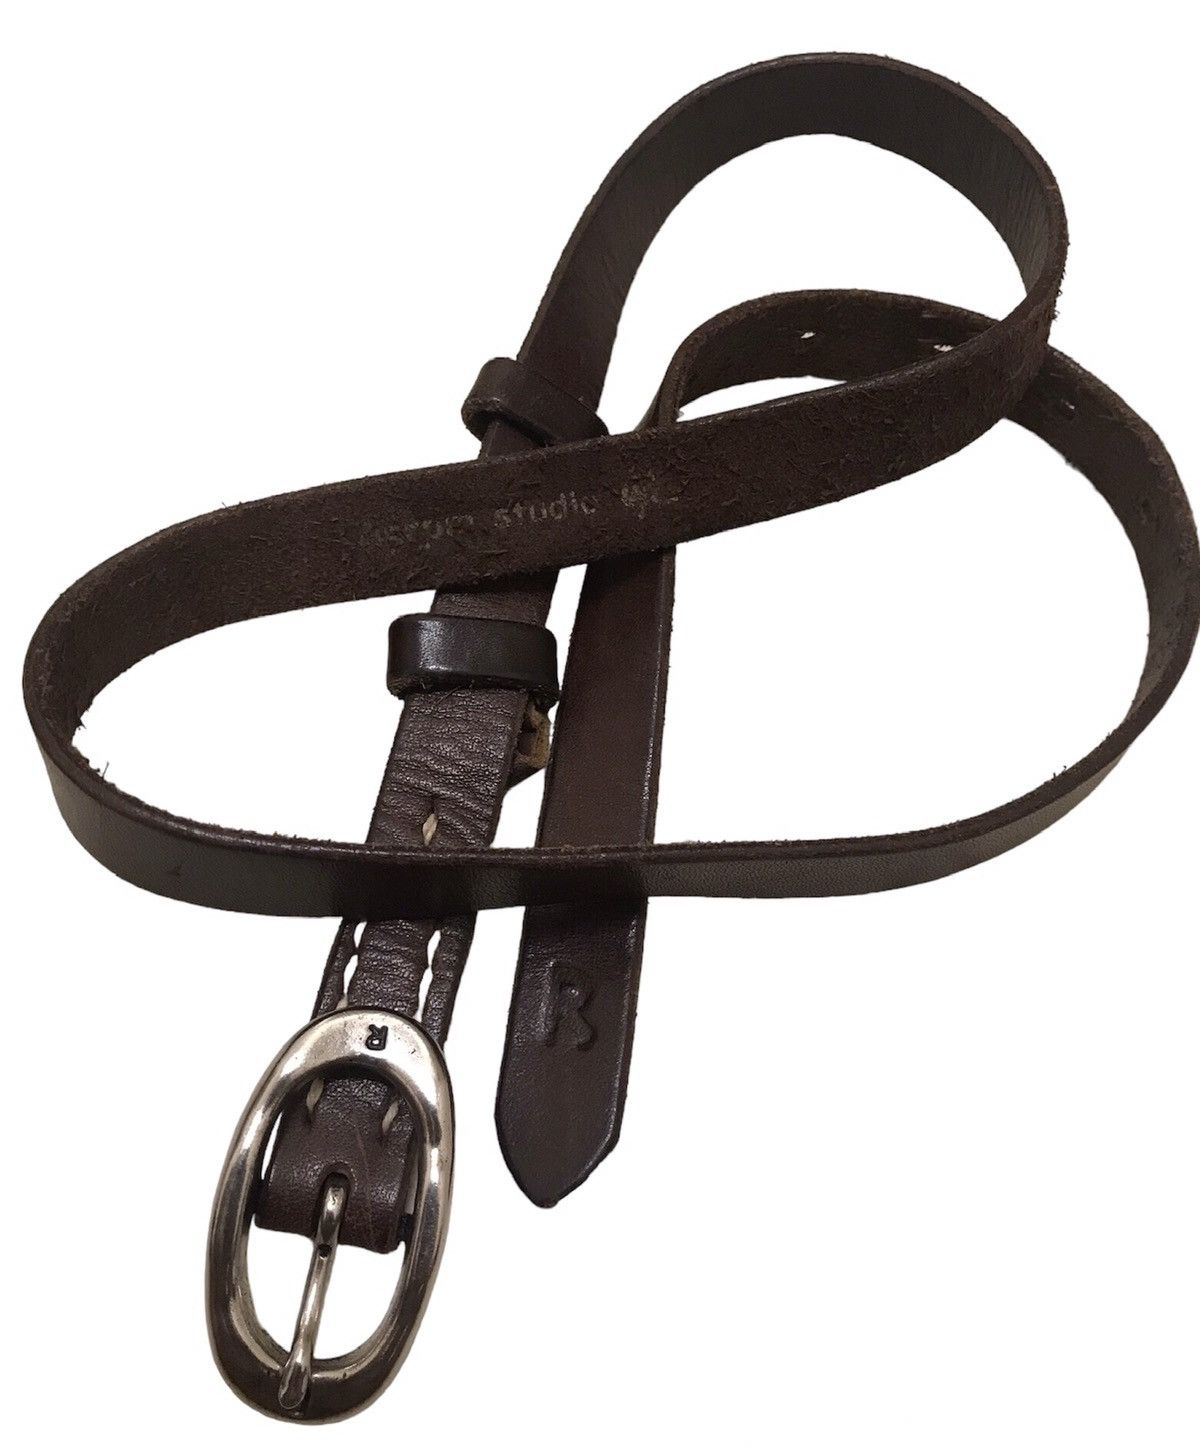 R by 45rpm studio mini leather belt - 3